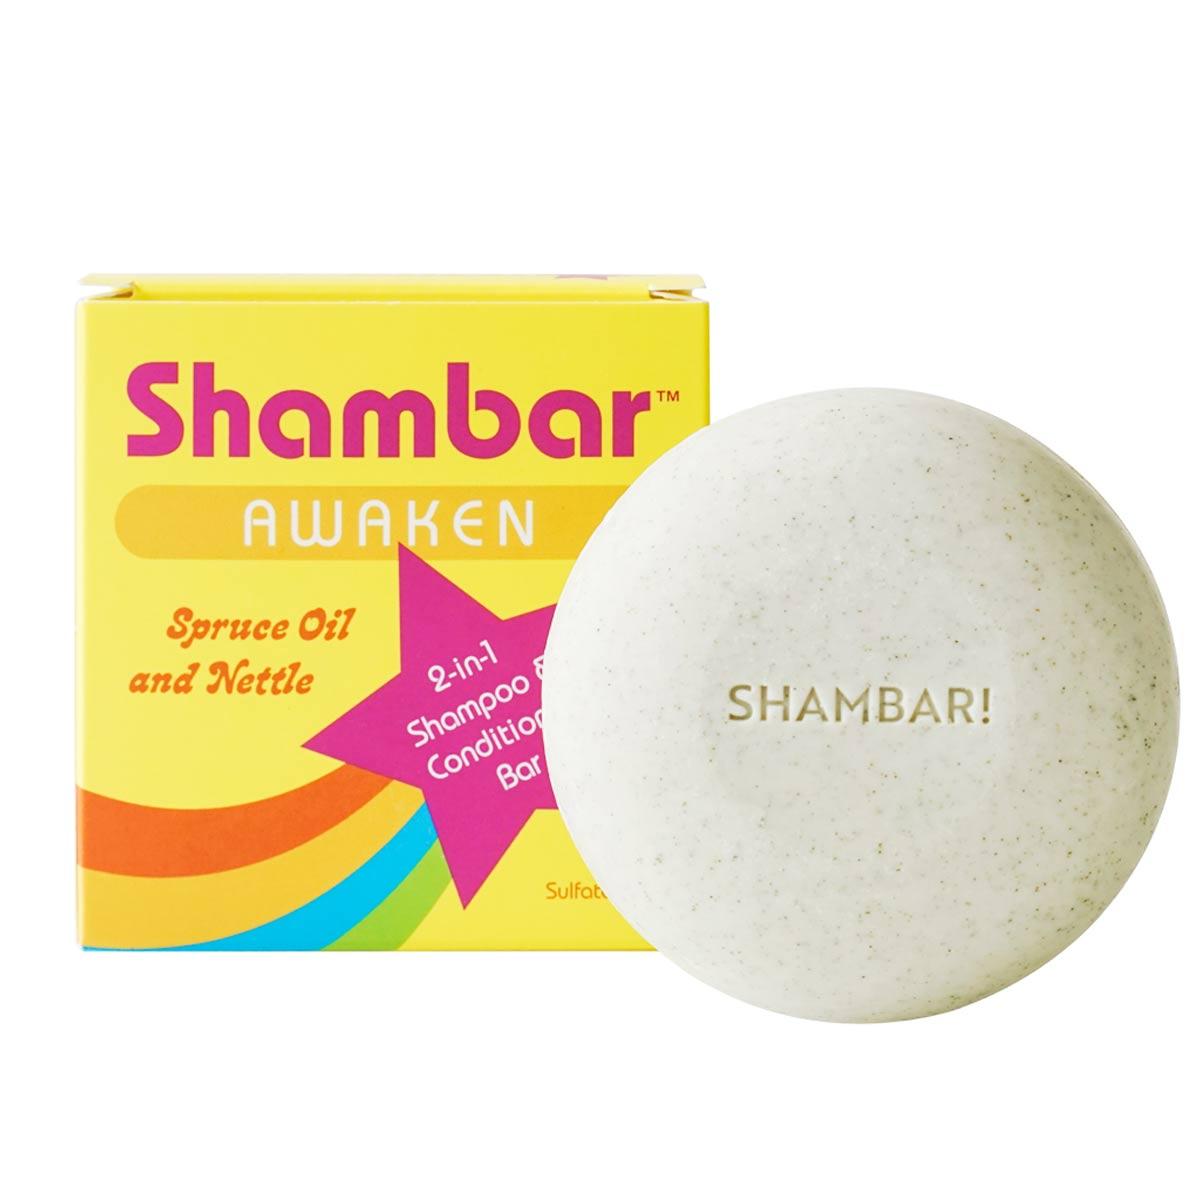 Primary image of Shampoo Bar Awaken